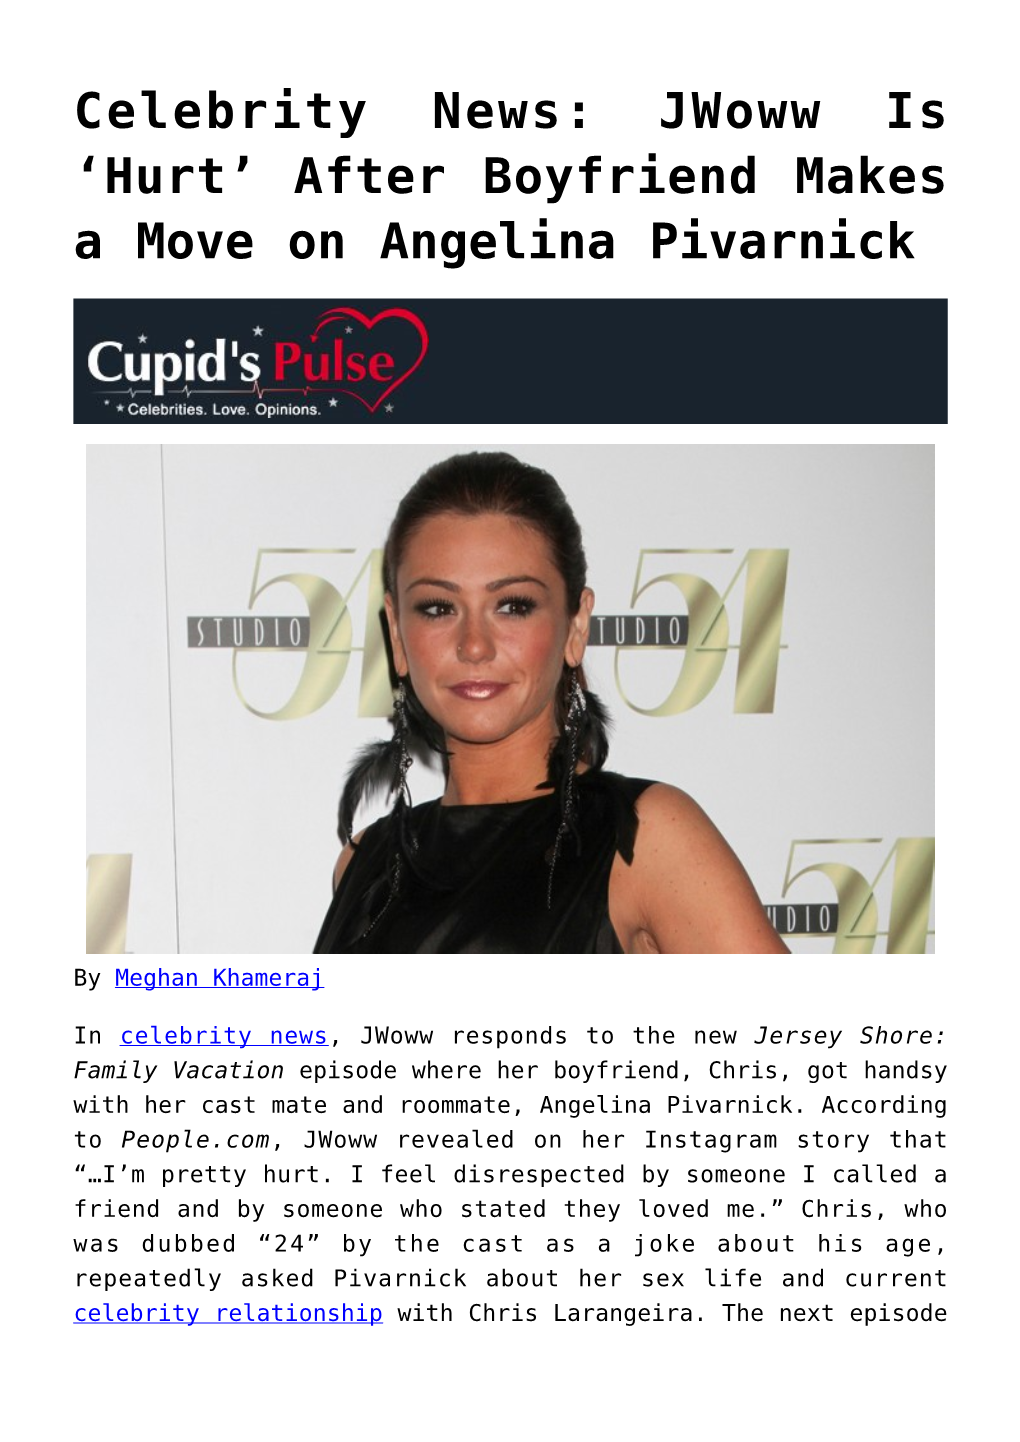 After Boyfriend Makes a Move on Angelina Pivarnick